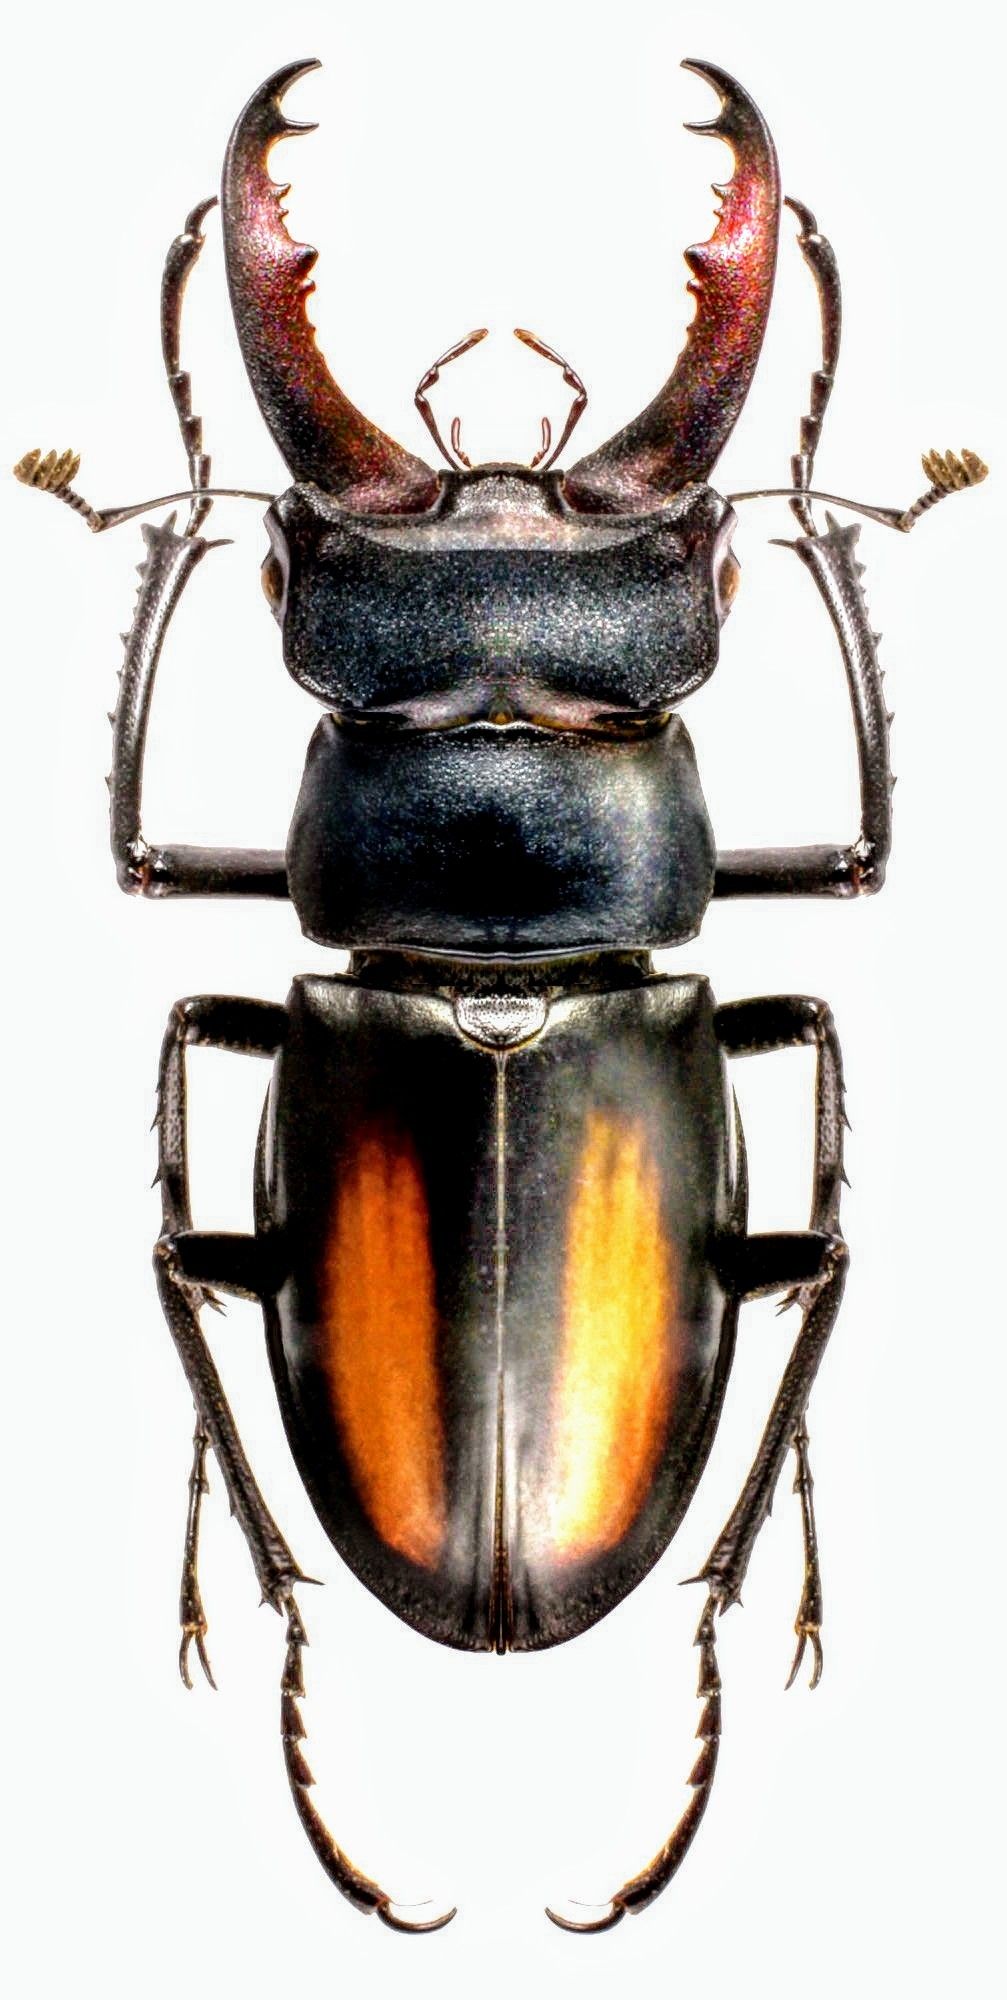 Prosopocoilus zebra beetle photo